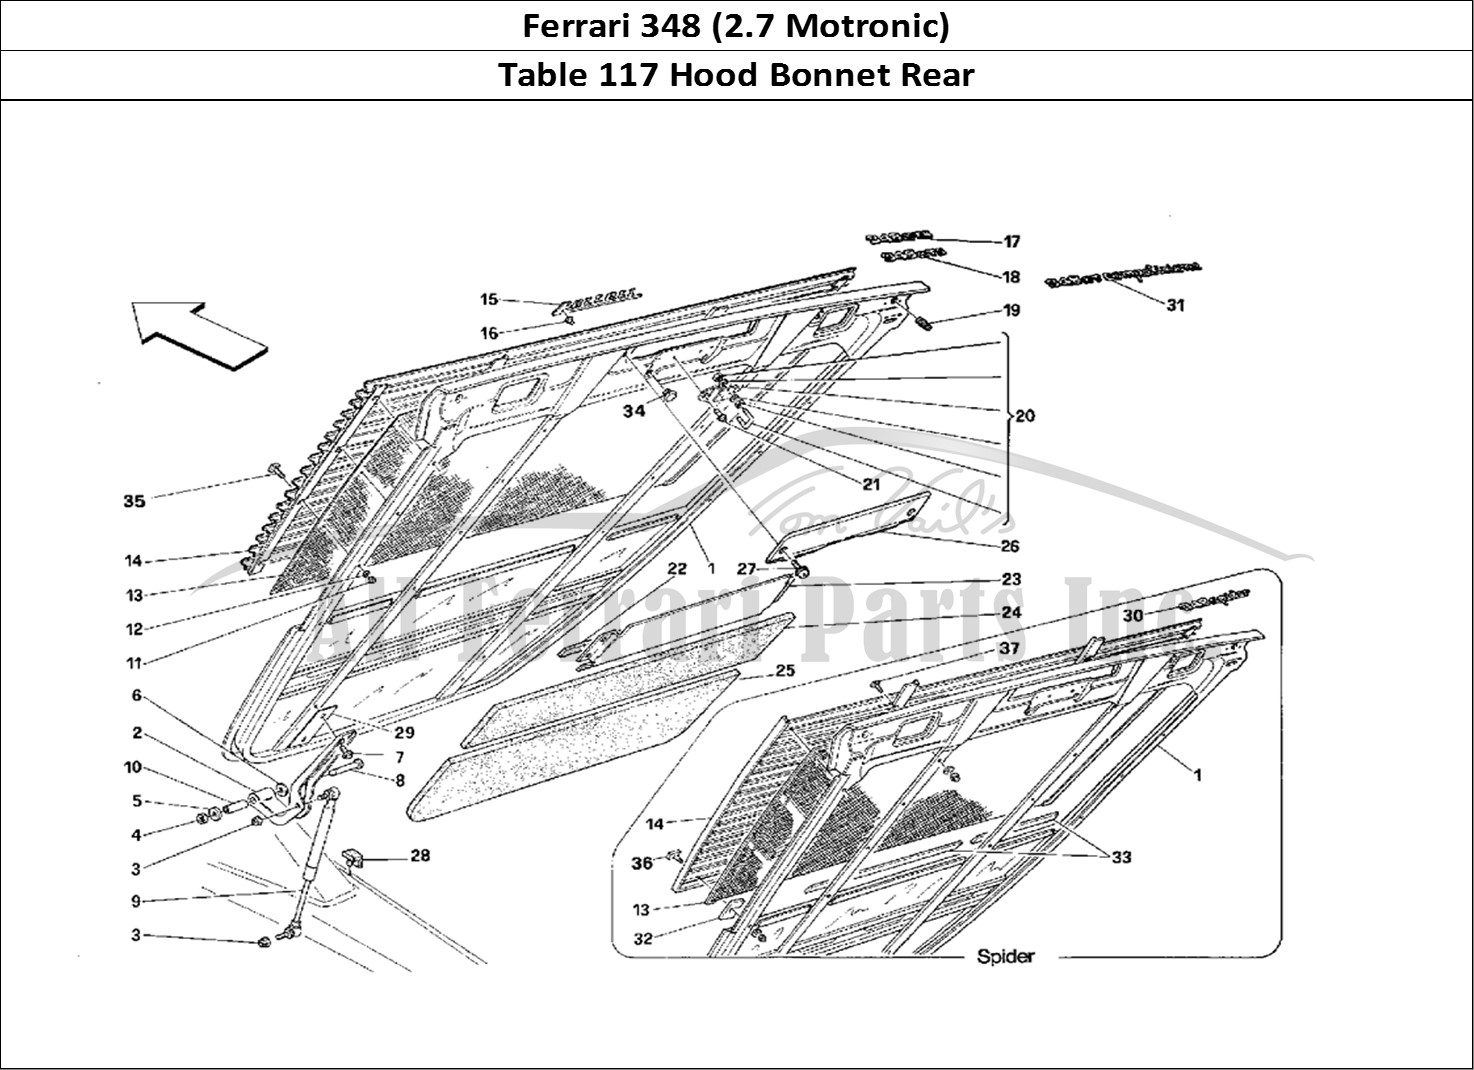 Ferrari Parts Ferrari 348 (2.7 Motronic) Page 117 Rear Hood